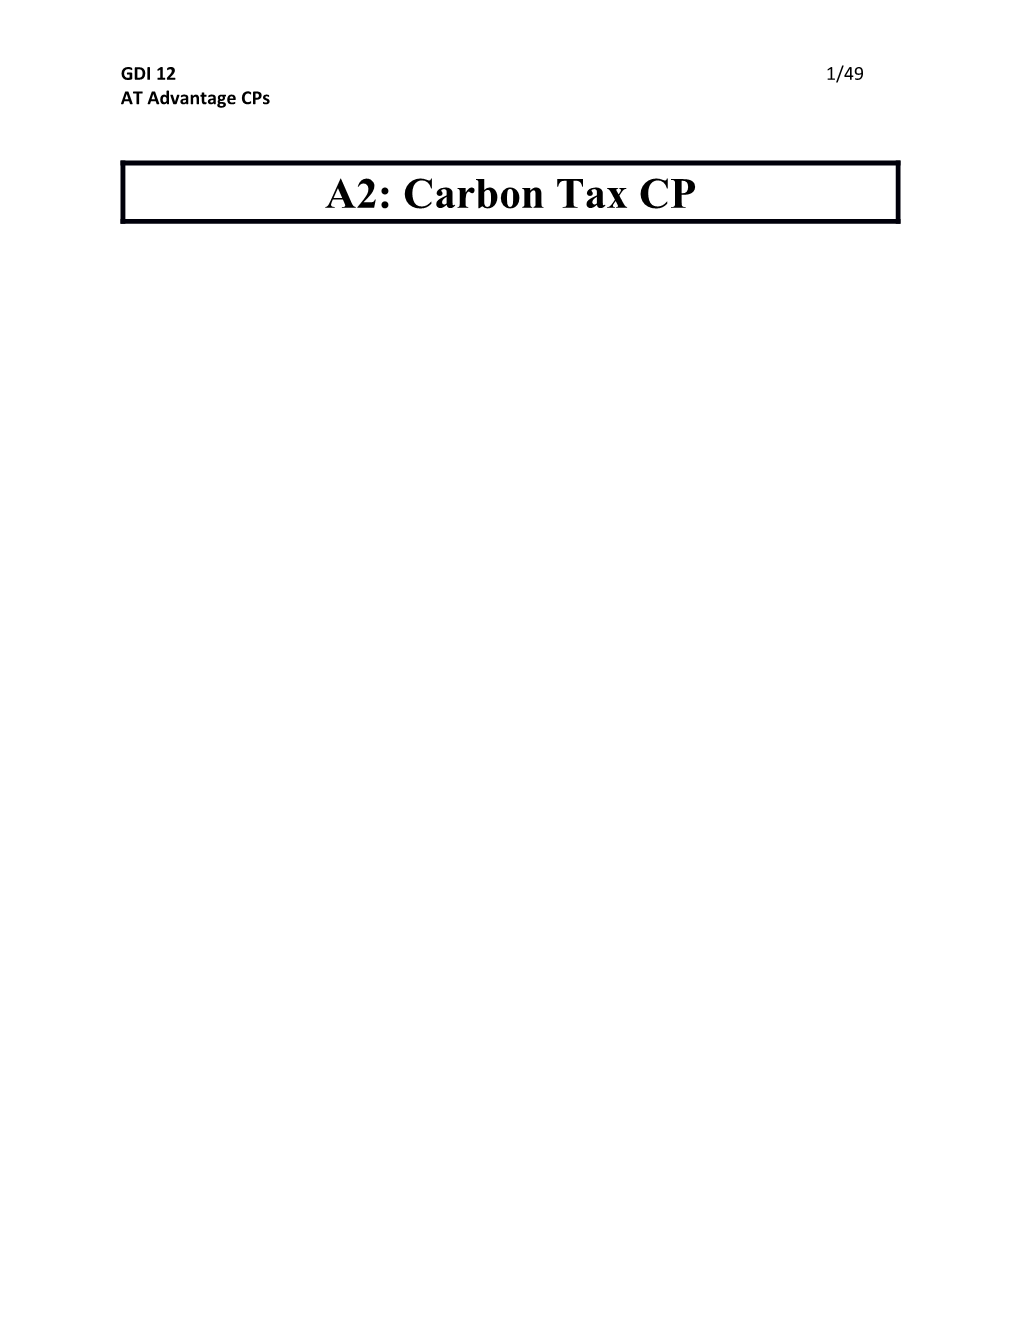 Carbon Taxes Bad Laundry List